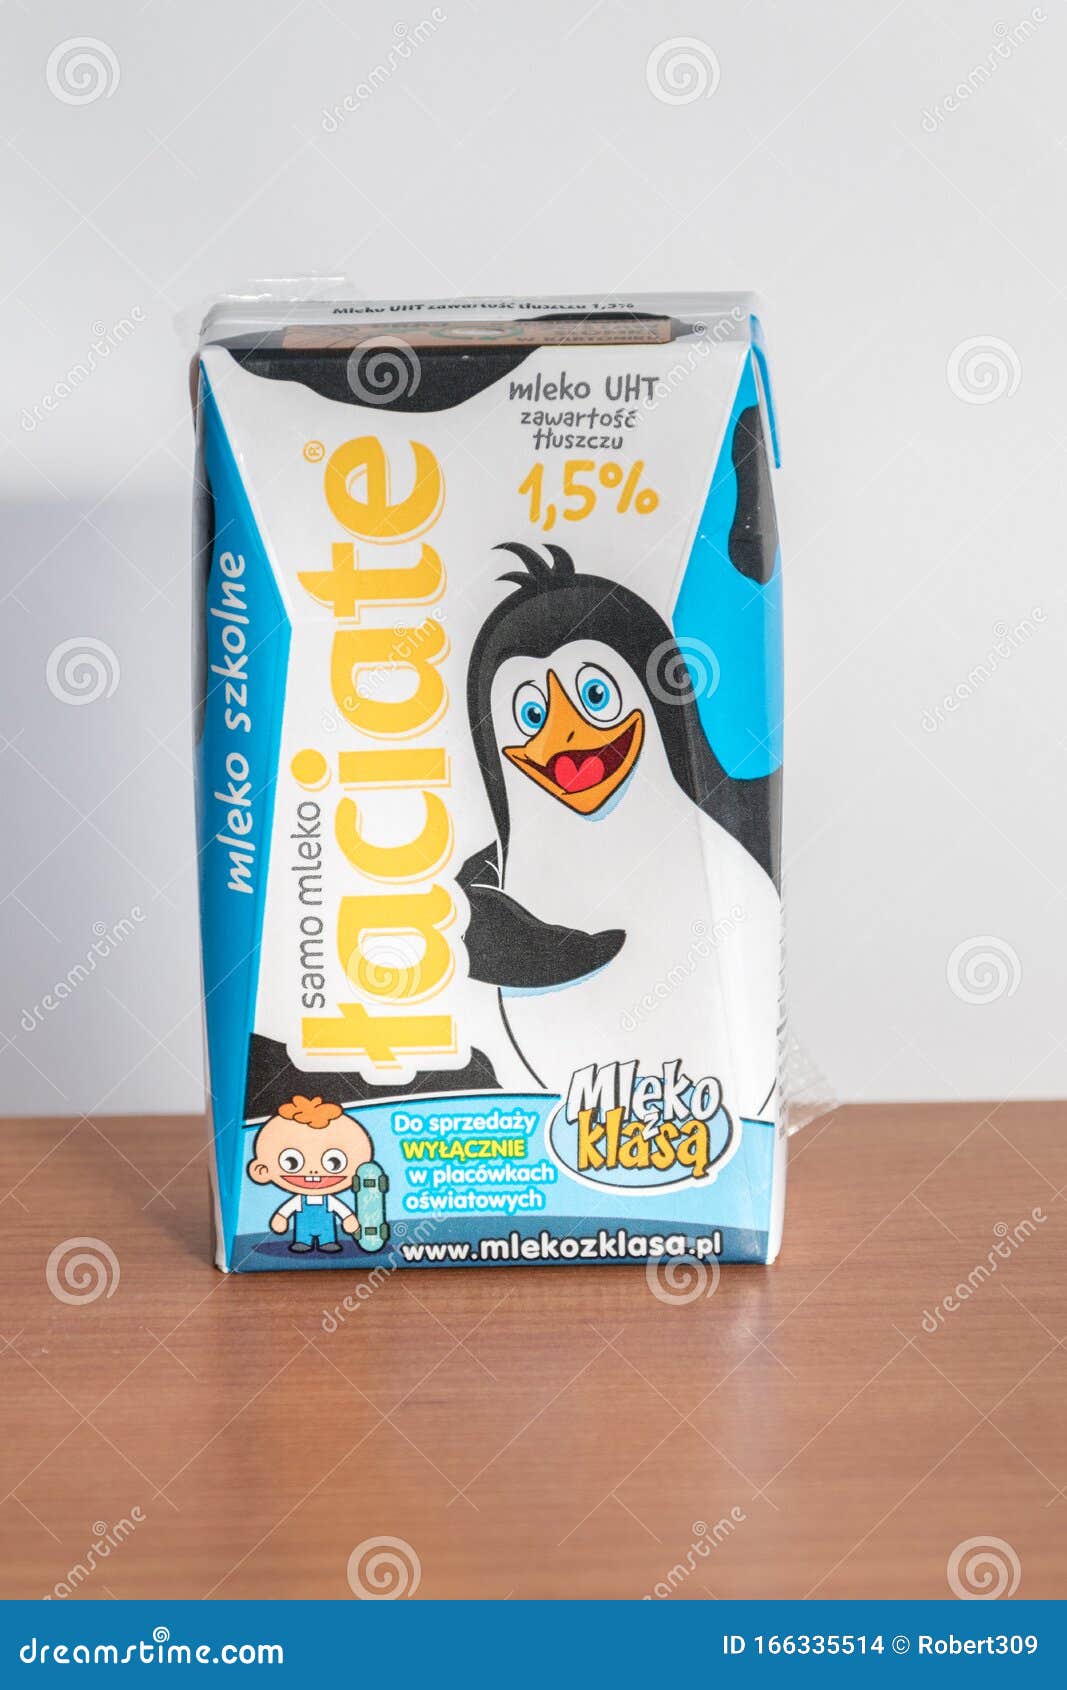 school white milk carton